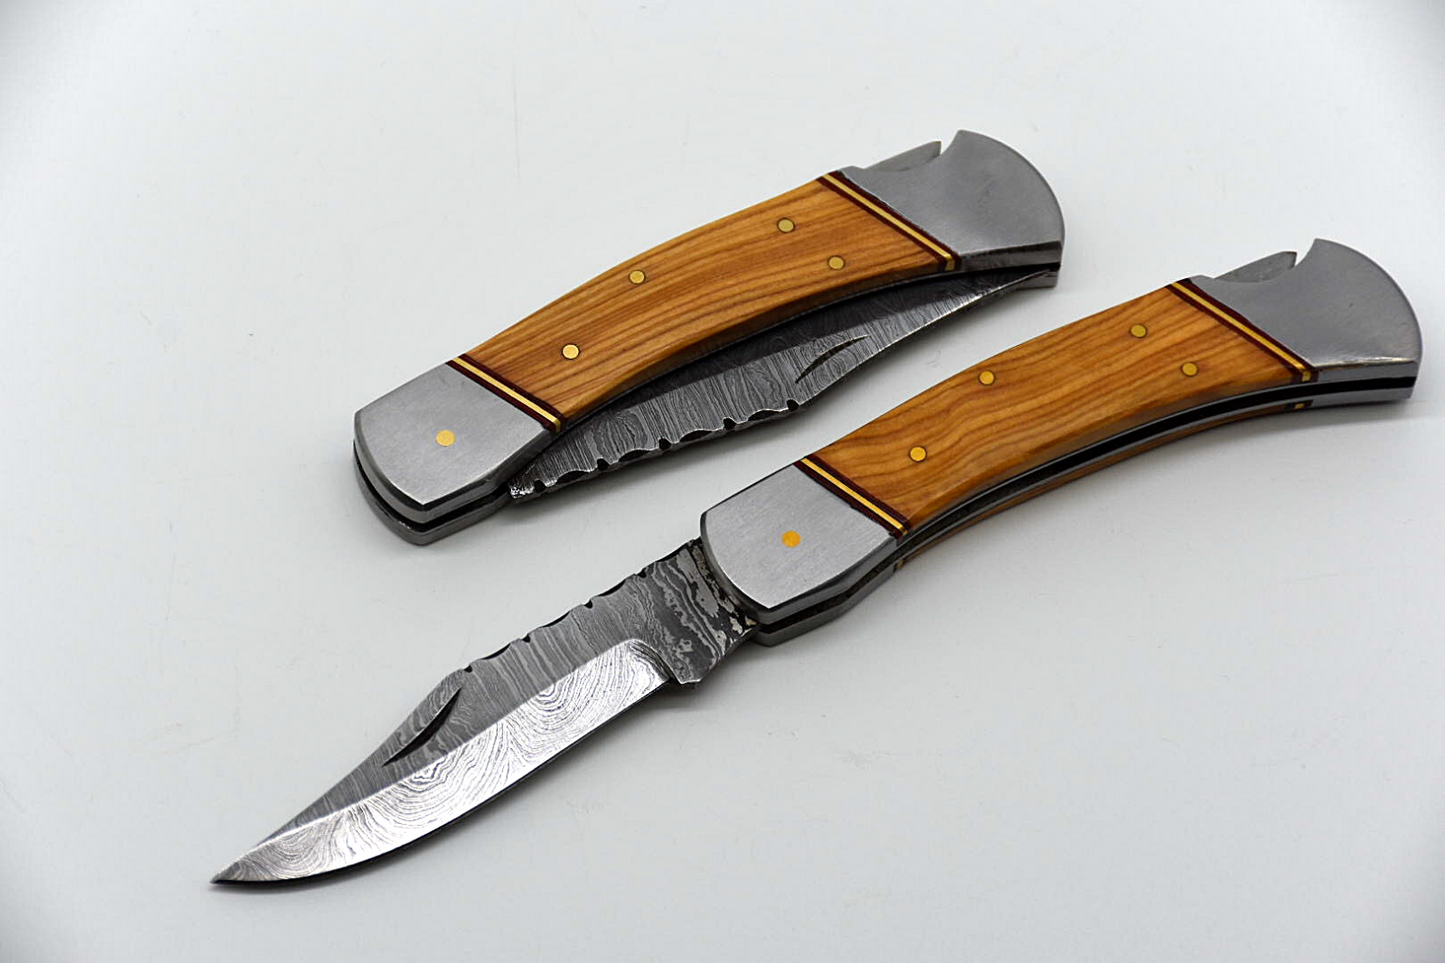 Handmade Wood Damascus Steel Folding Pocket Knife, Hunting Camping W/Sheath